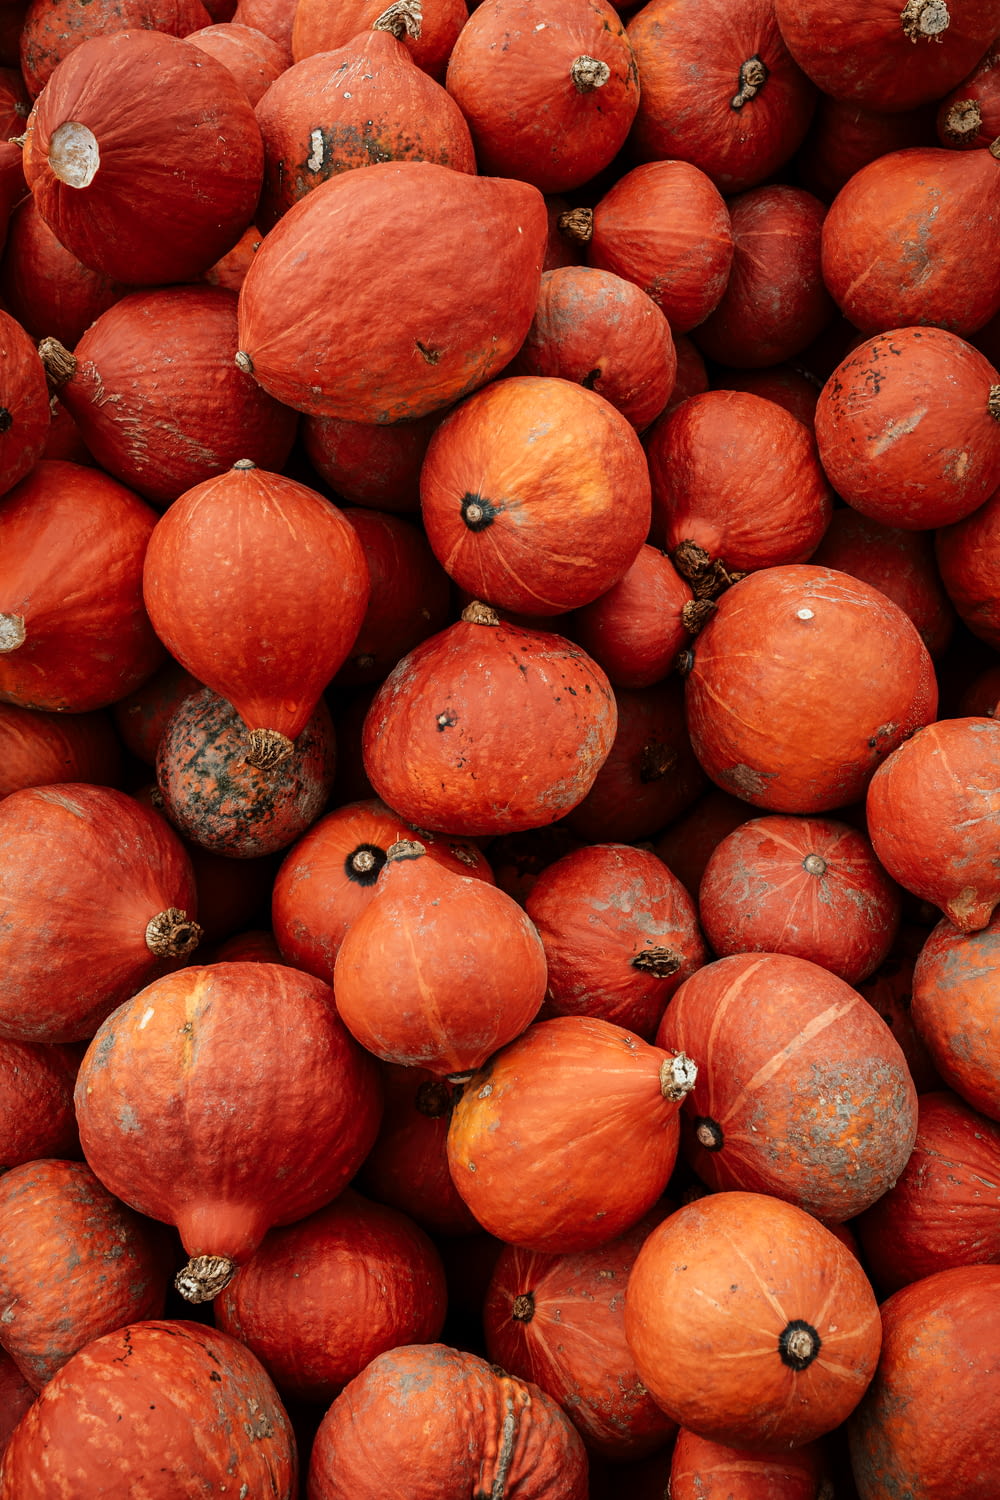 red round fruit lot during daytime